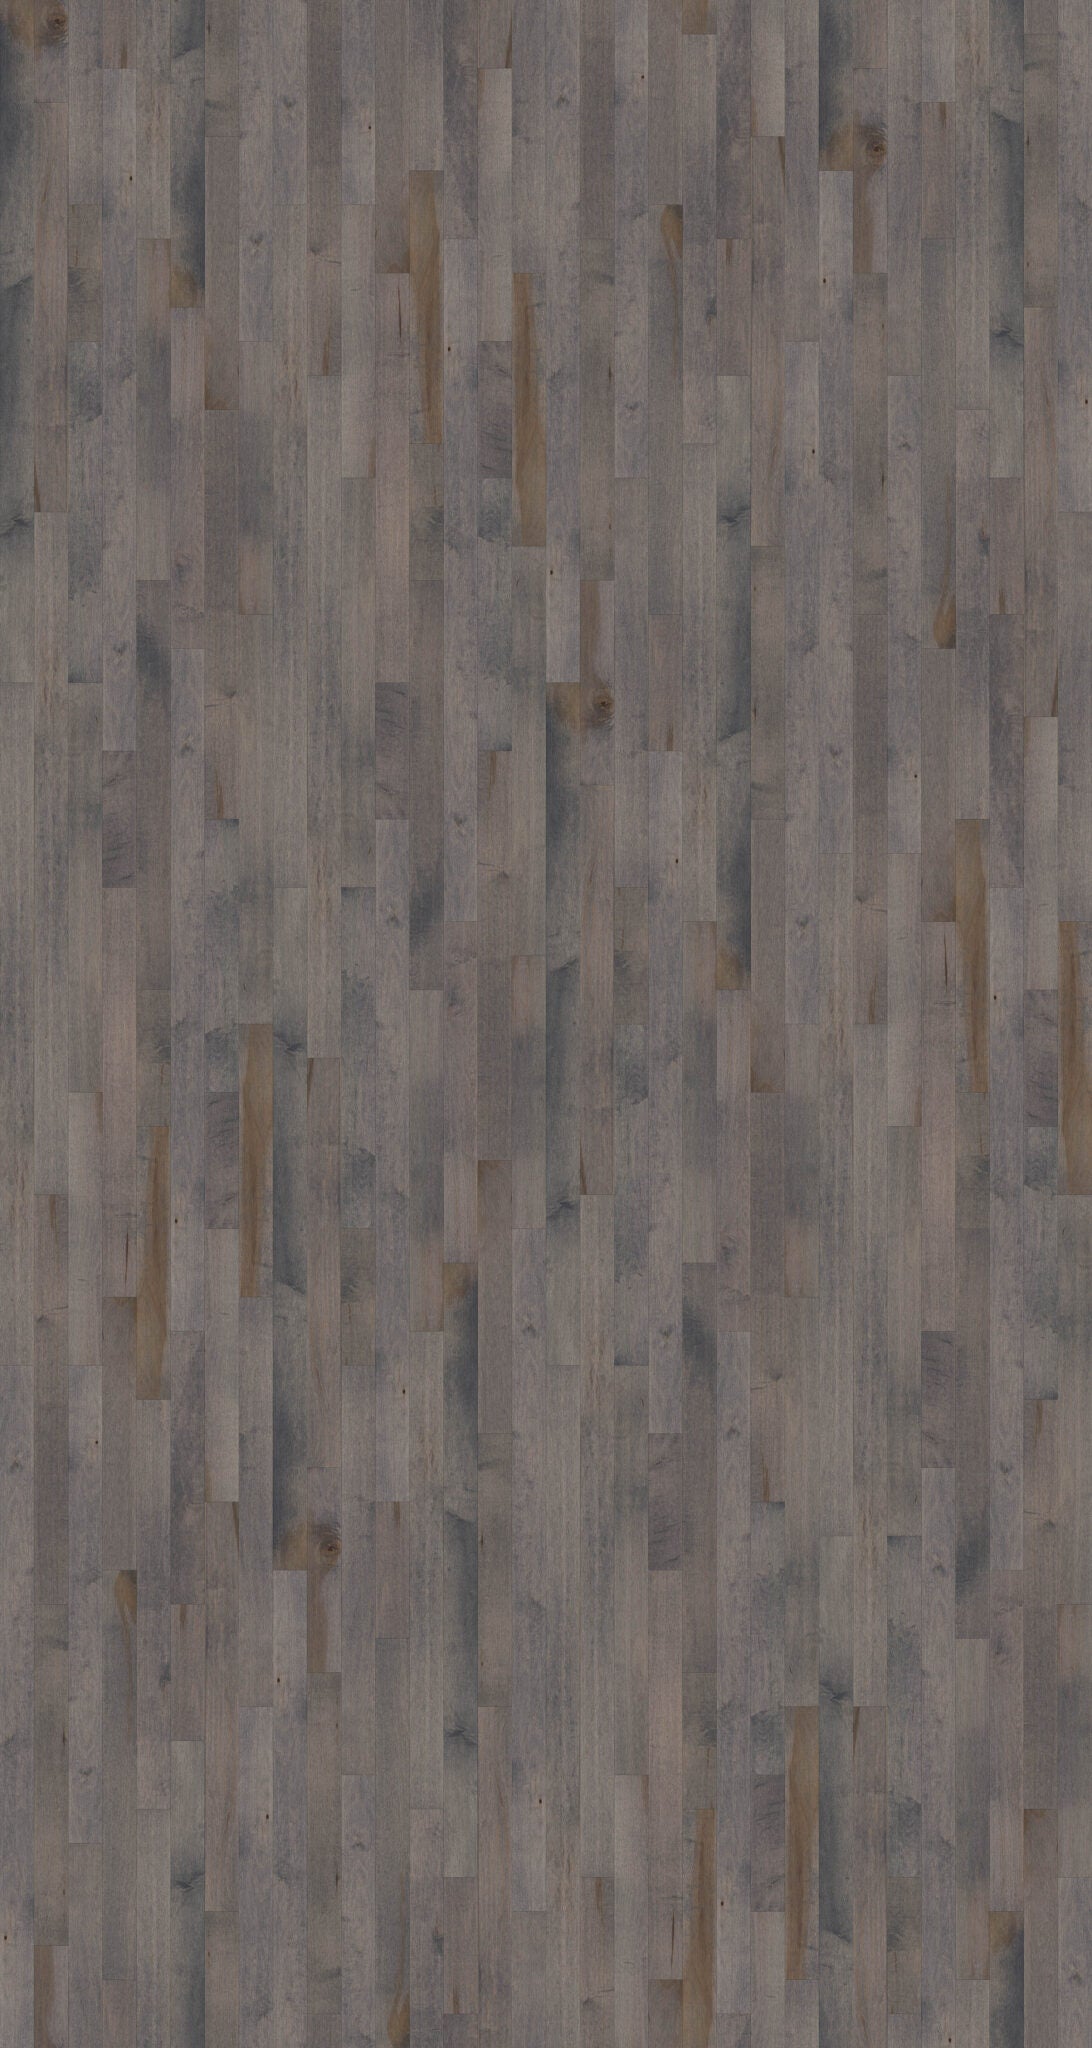 3 1/4" x 3/4" Prefinished Storm Cloud Maple Hardwood Flooring